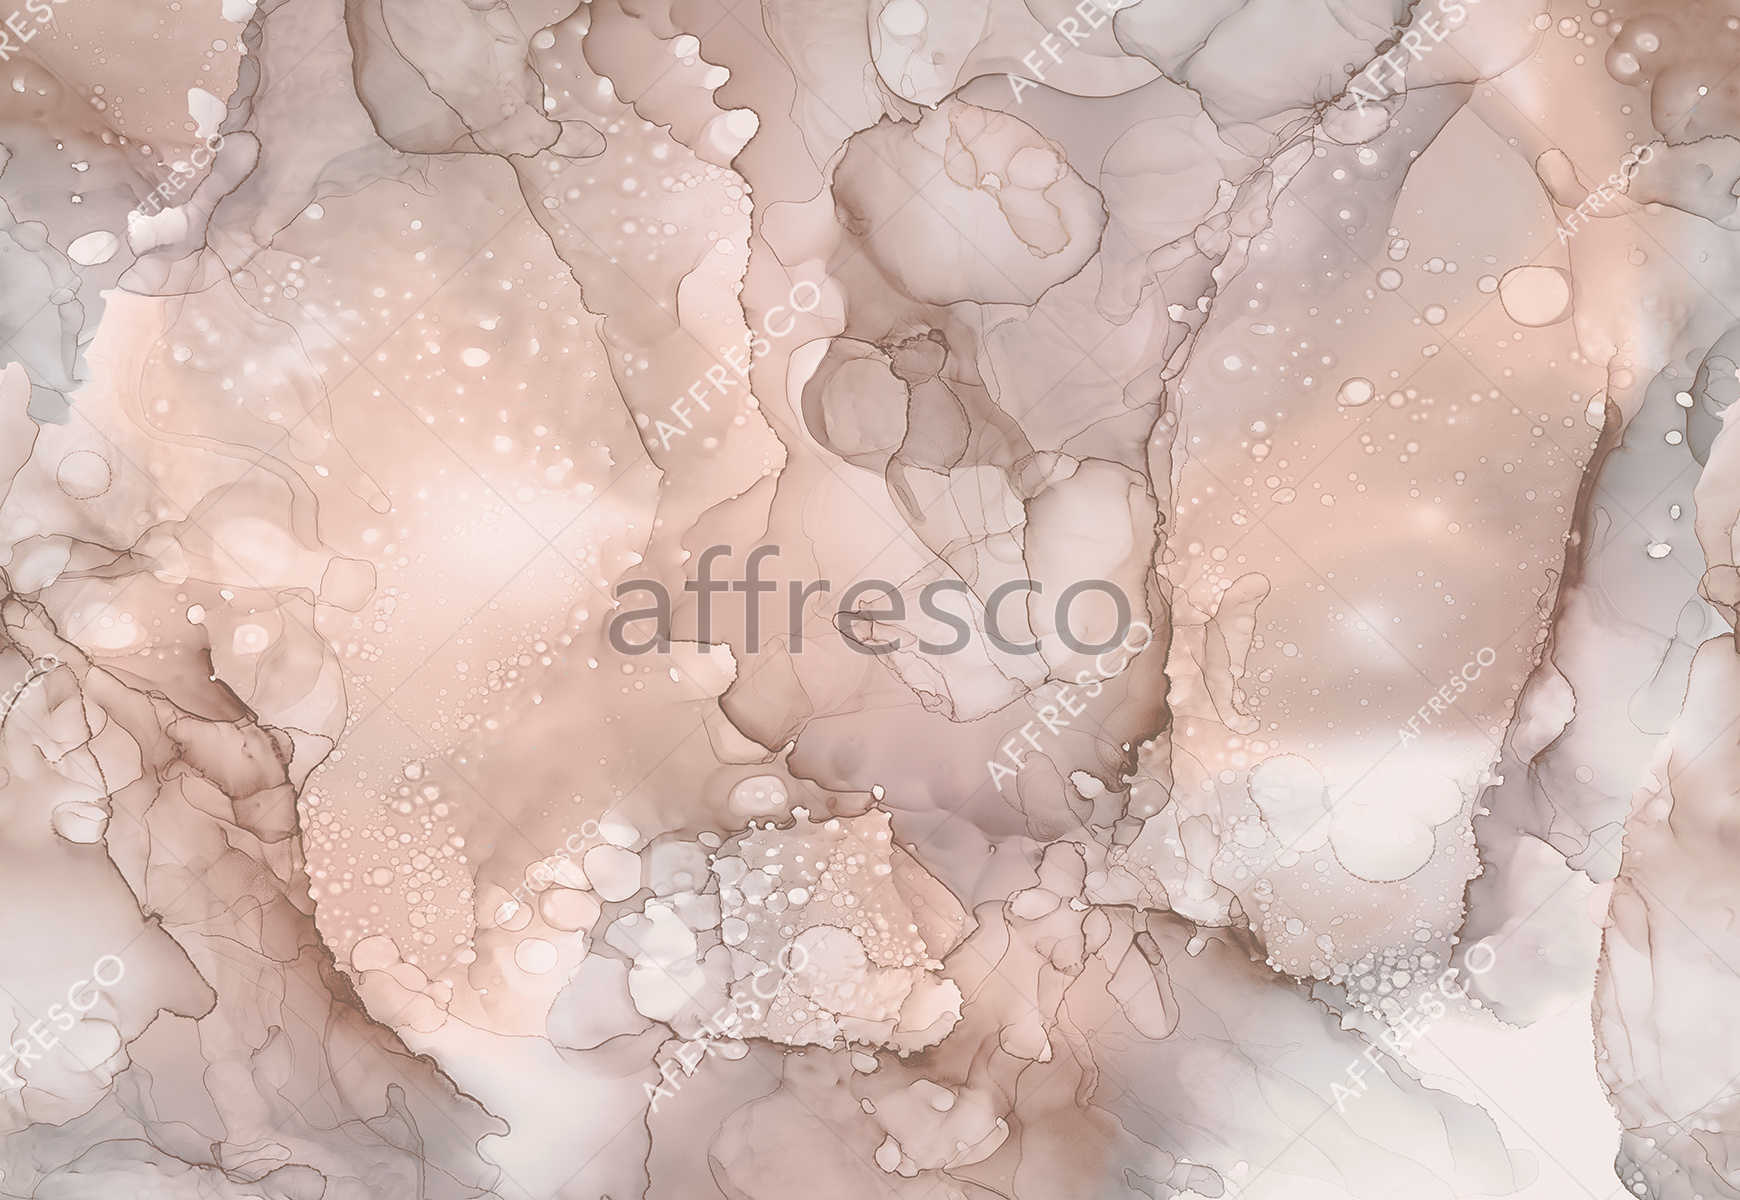 ID138798 | Textures |  | Affresco Factory